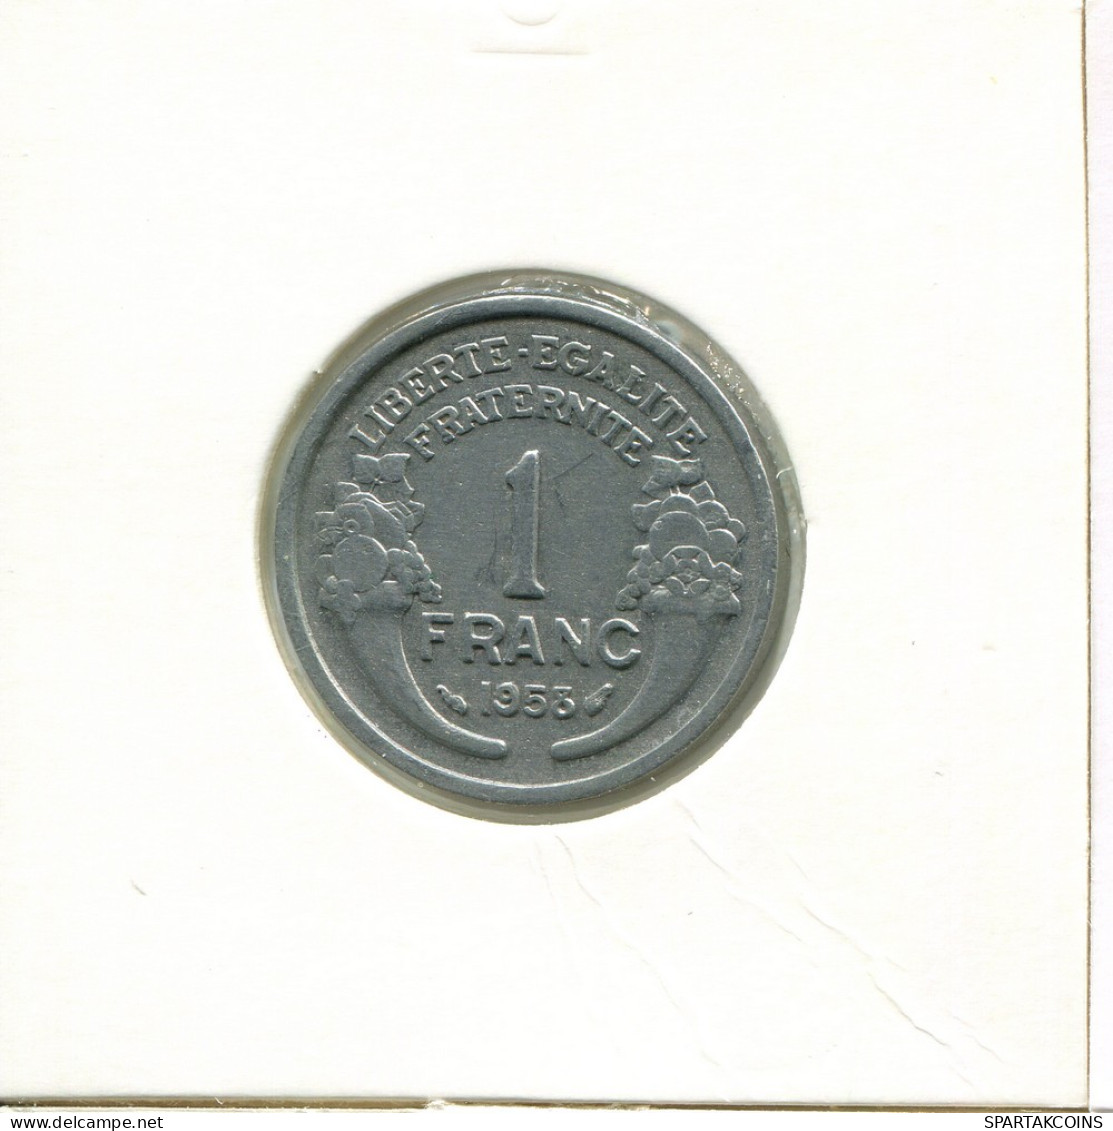 1 FRANC 1958 FRANCE Coin French Coin #AK605 - 1 Franc